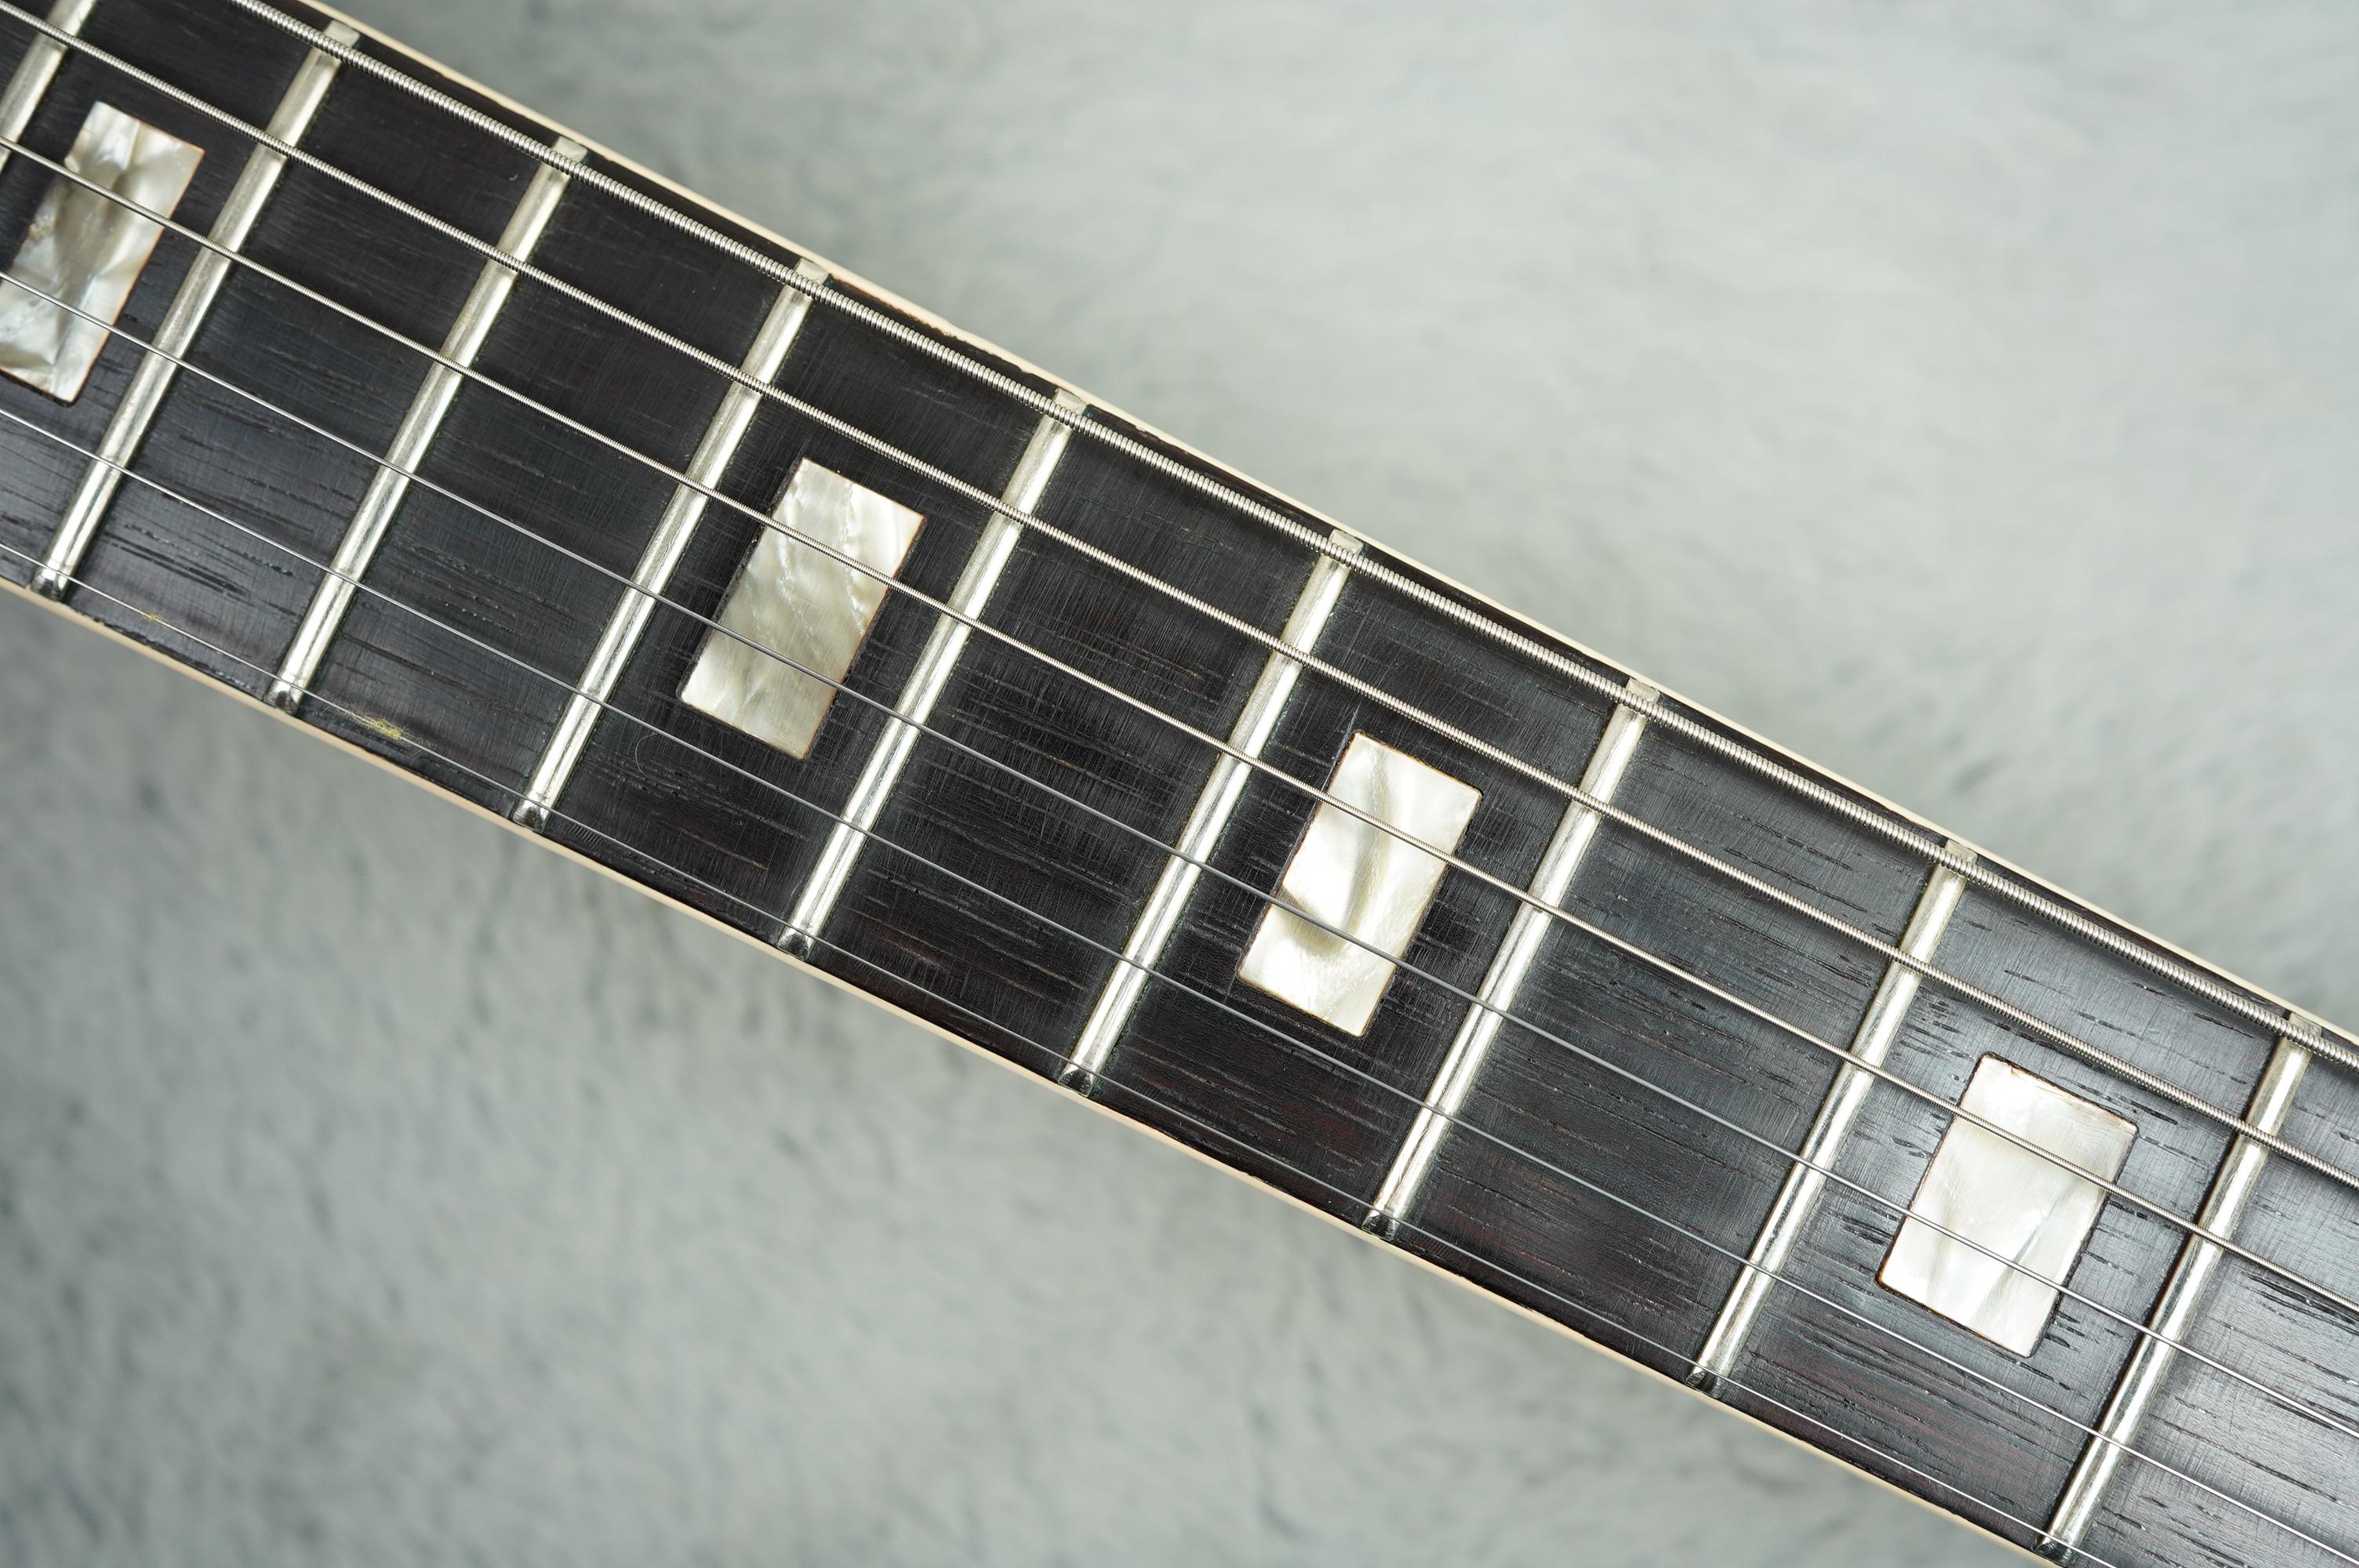 1964 Gibson ES-330 TDC